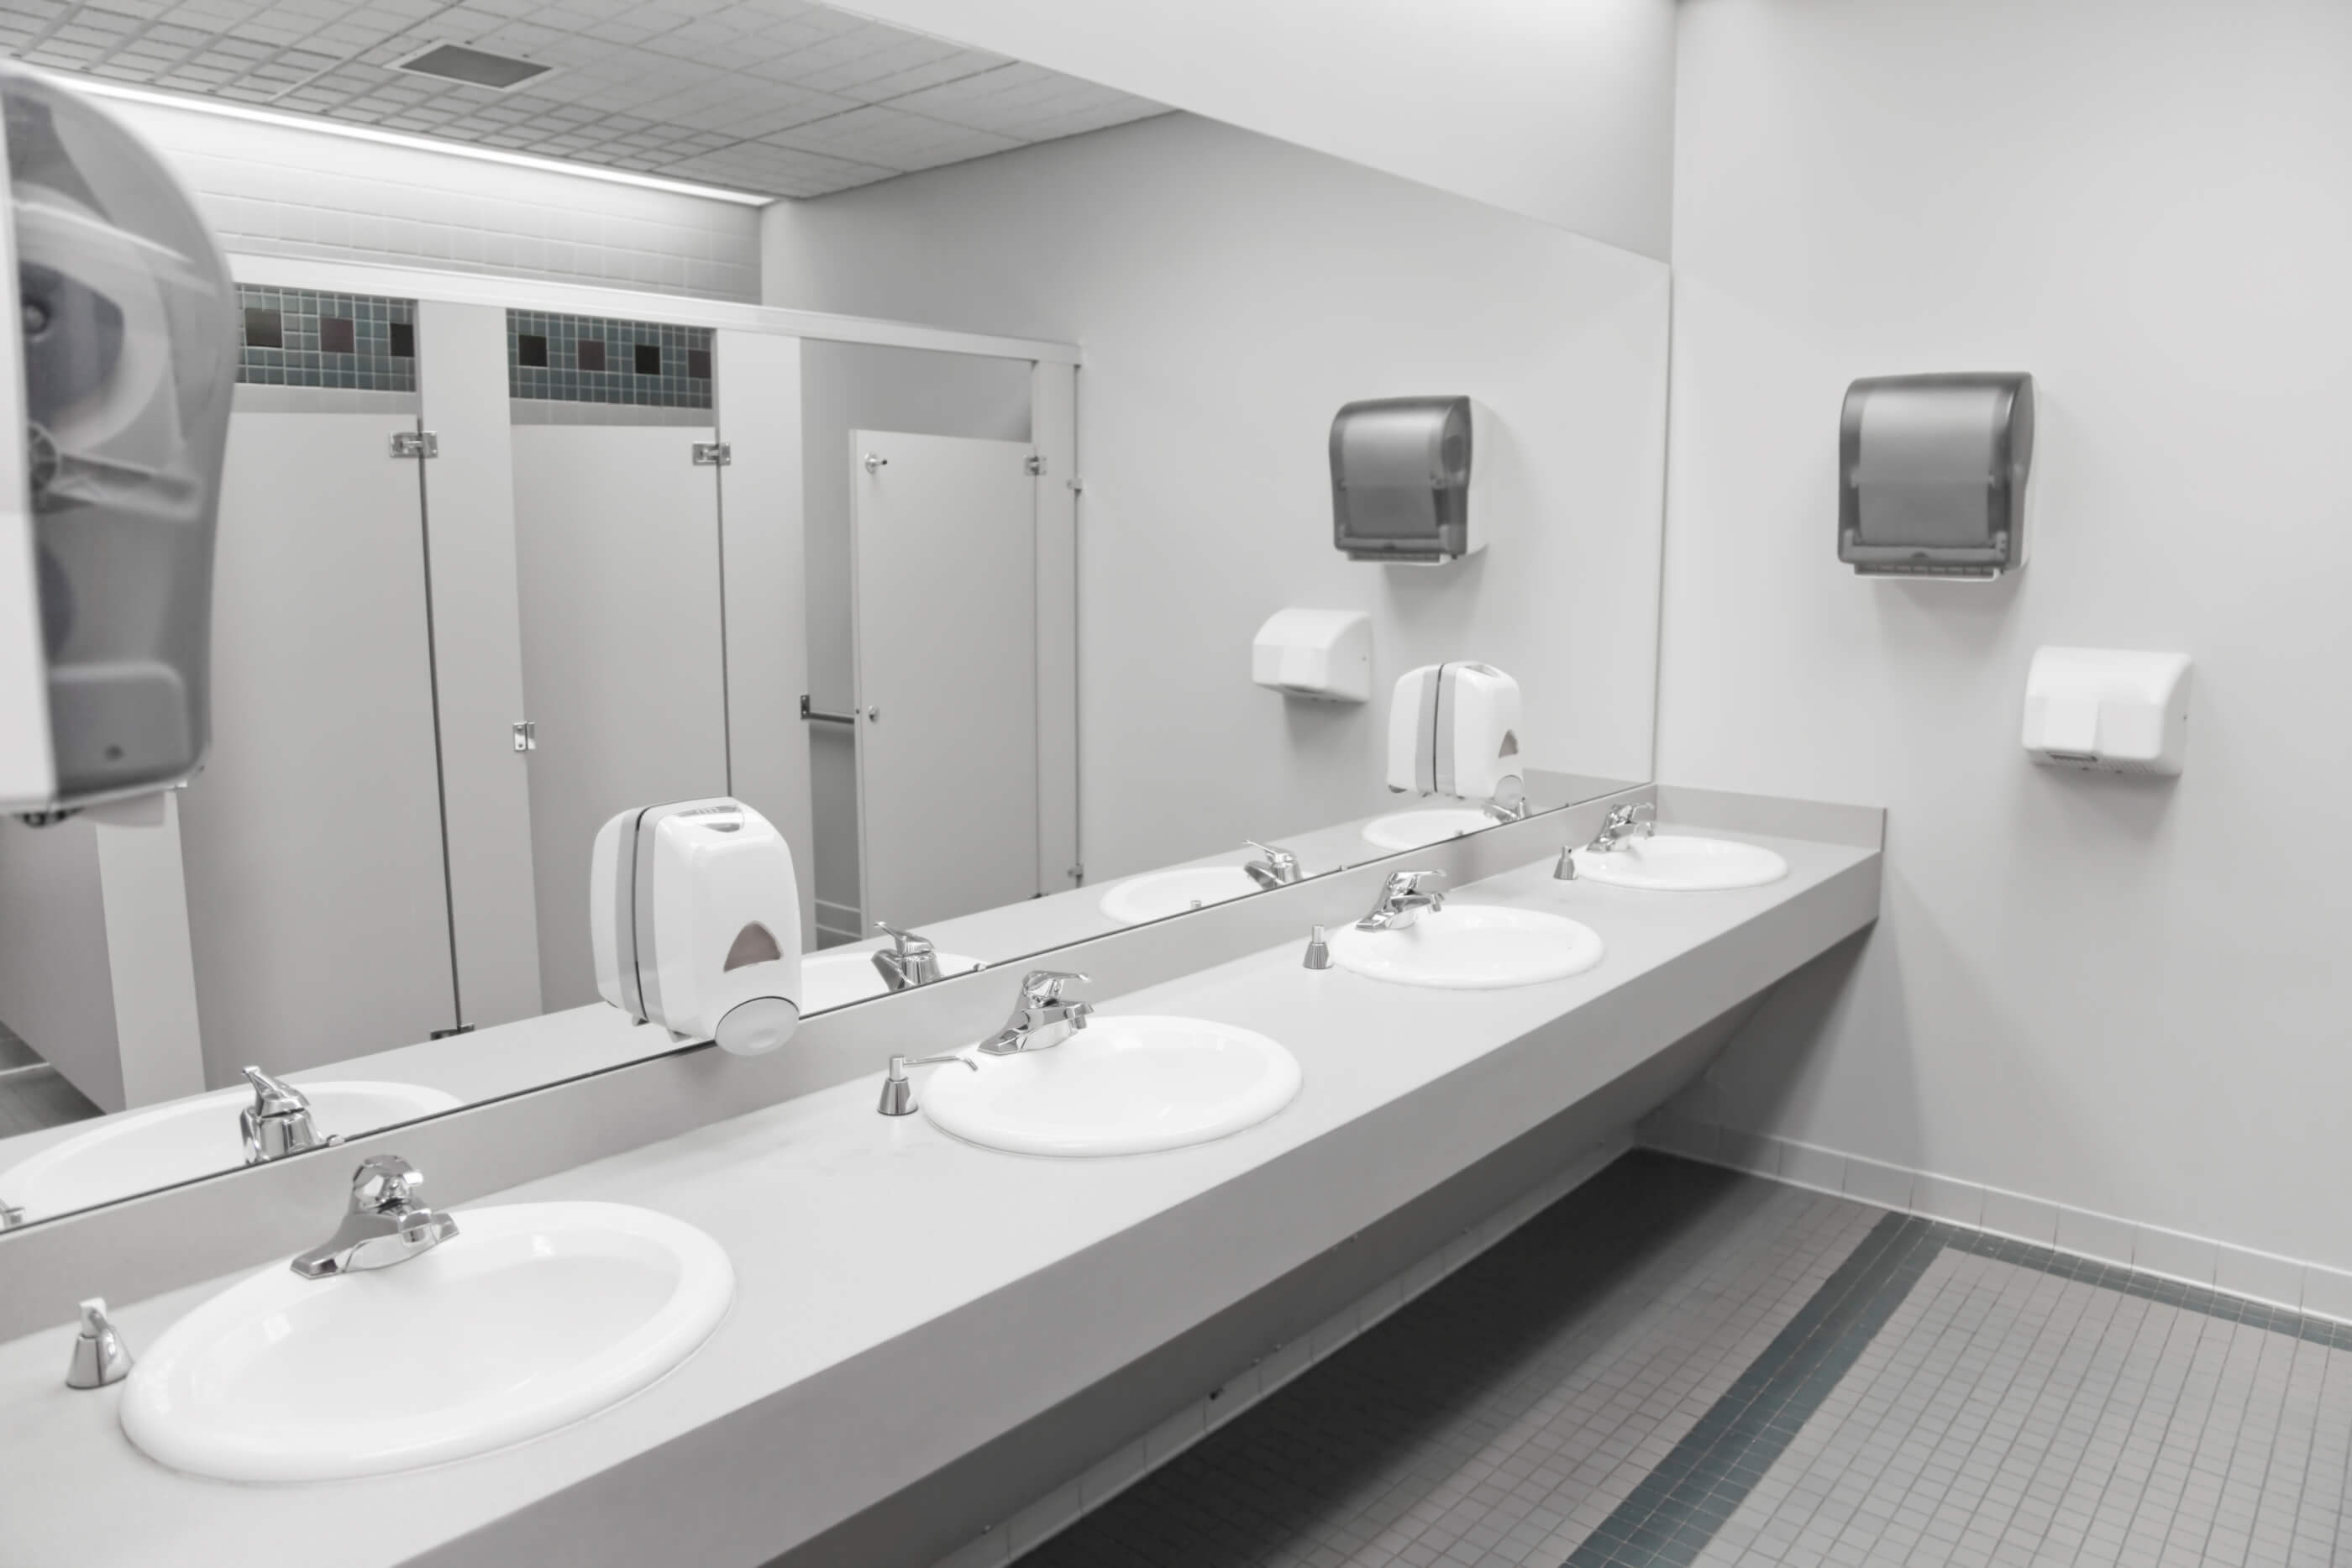 Use Bathroom Installations in Restaurant Bathroom Ideas